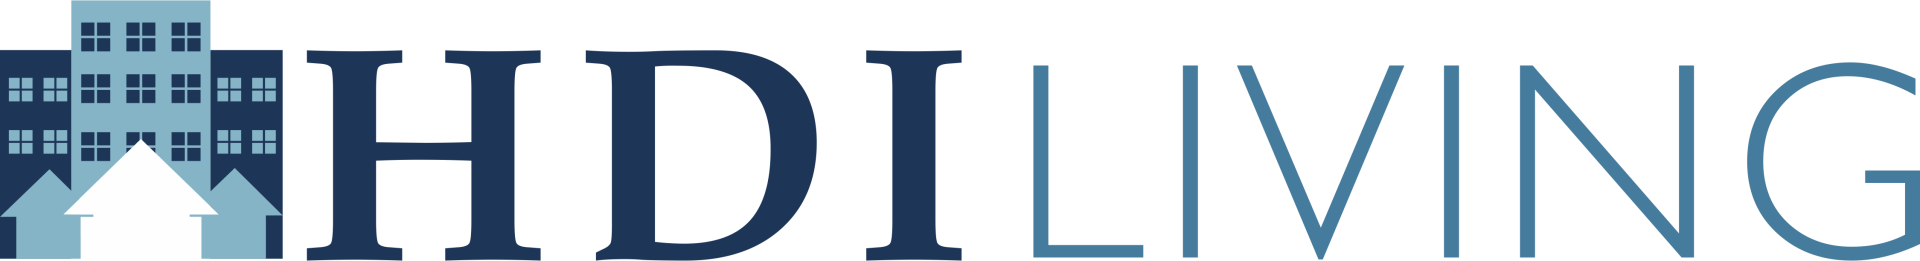 HDI Properties LLC - Logo